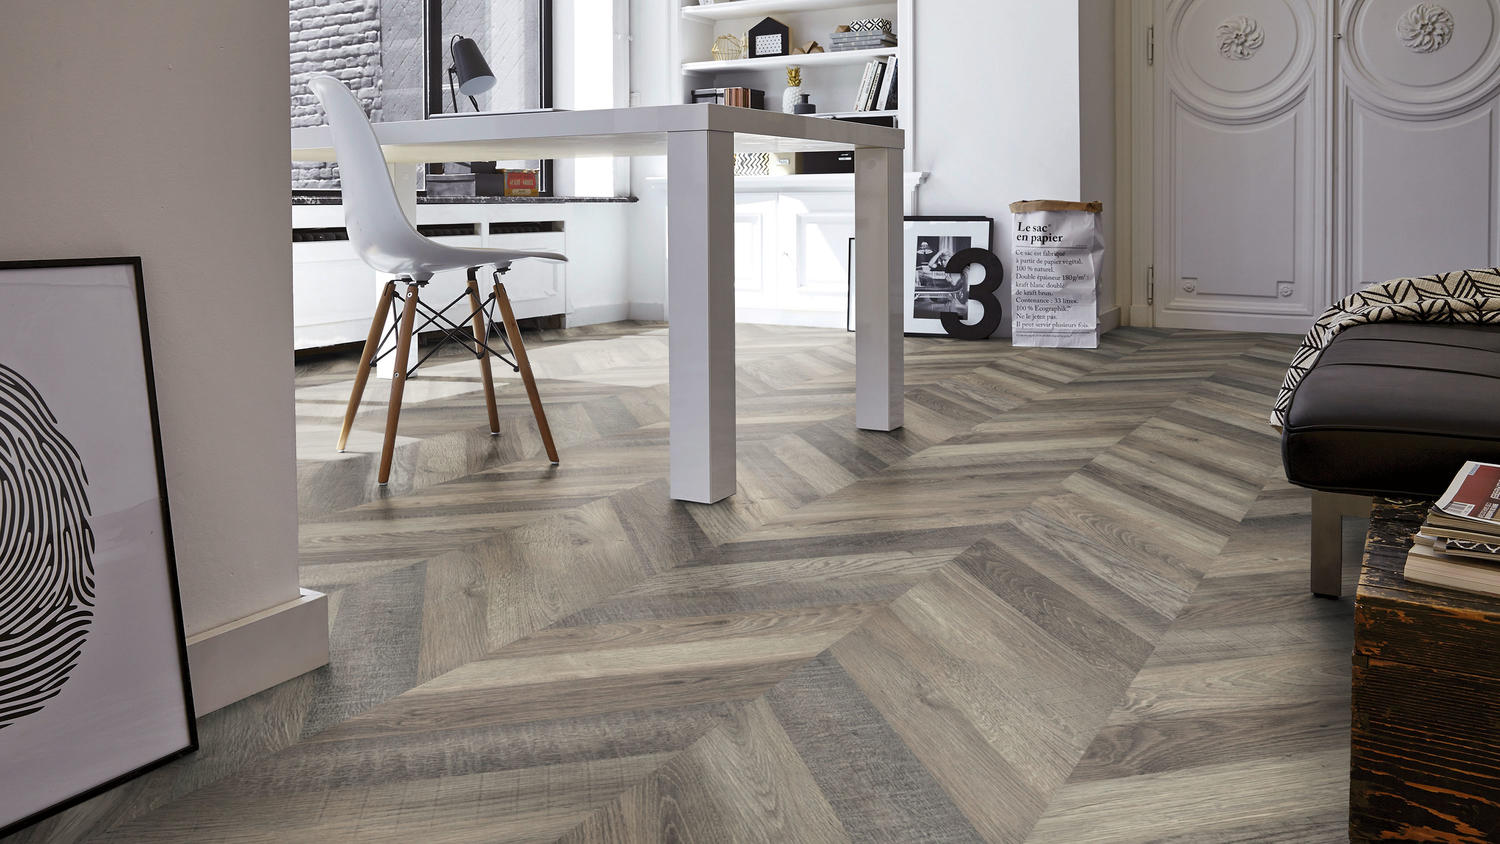 Choosing Laminate Flooring For An, How To Match Laminate Flooring Tile